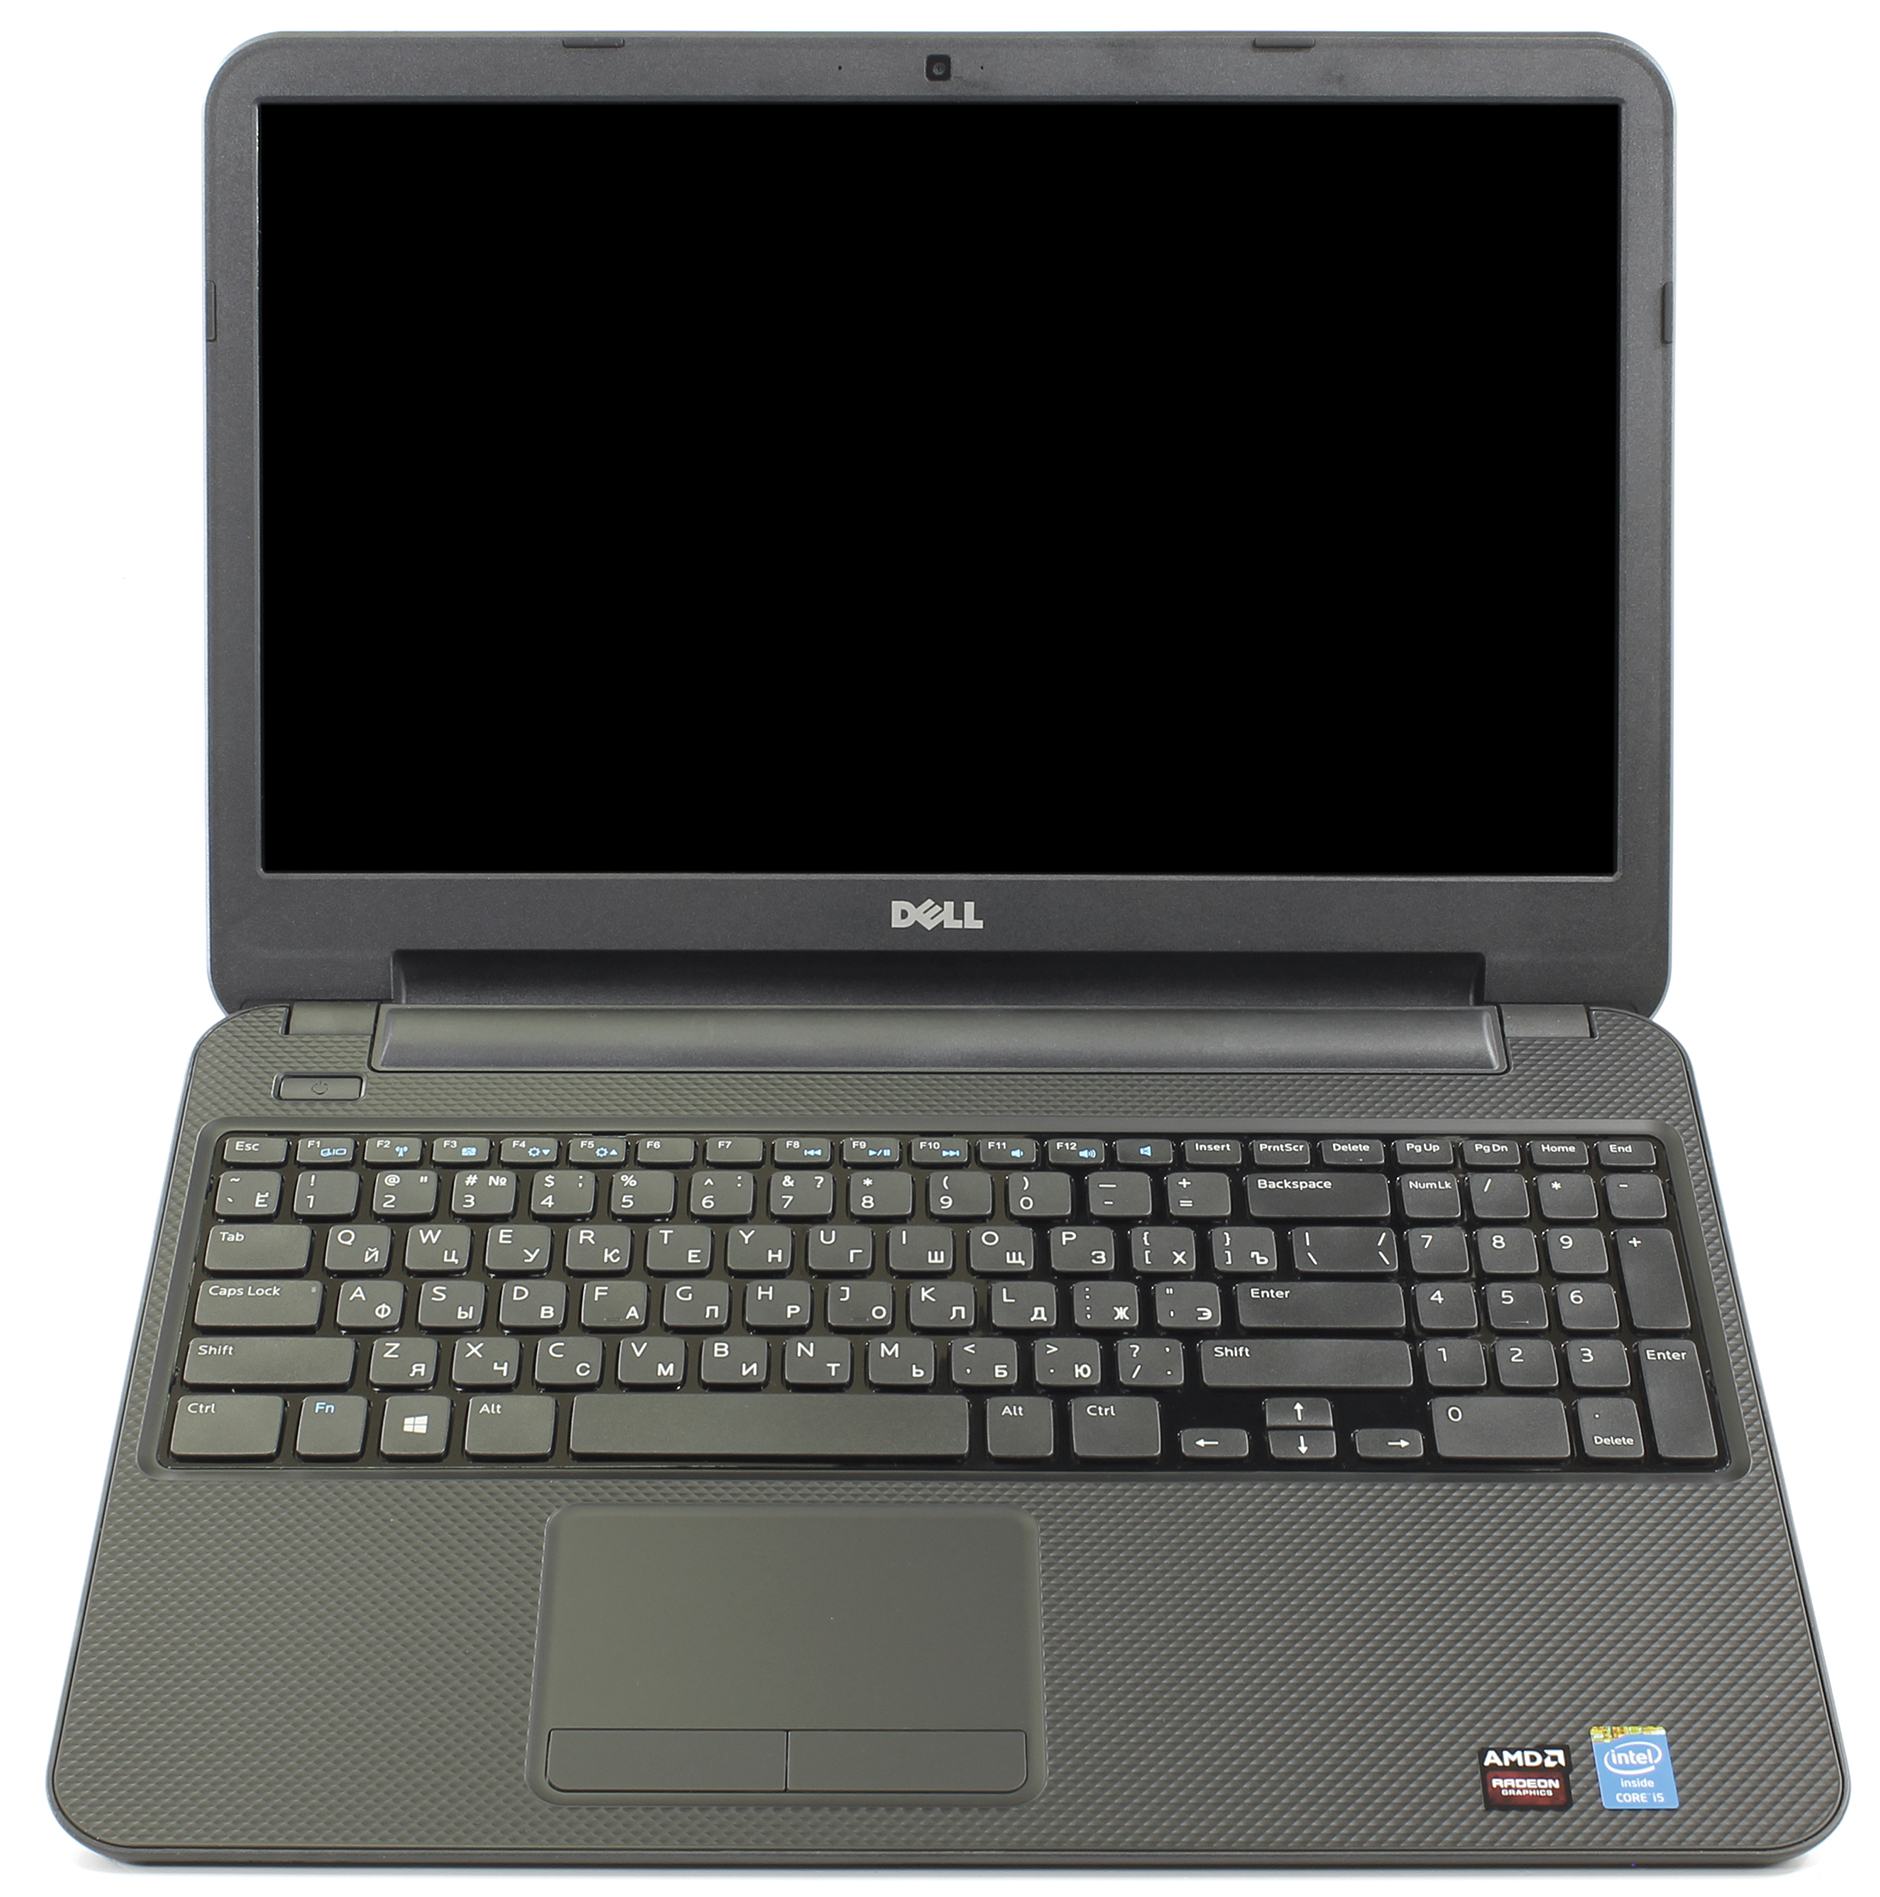 Ноутбук Dell Inspiron 3537 (I35745ddl-24)